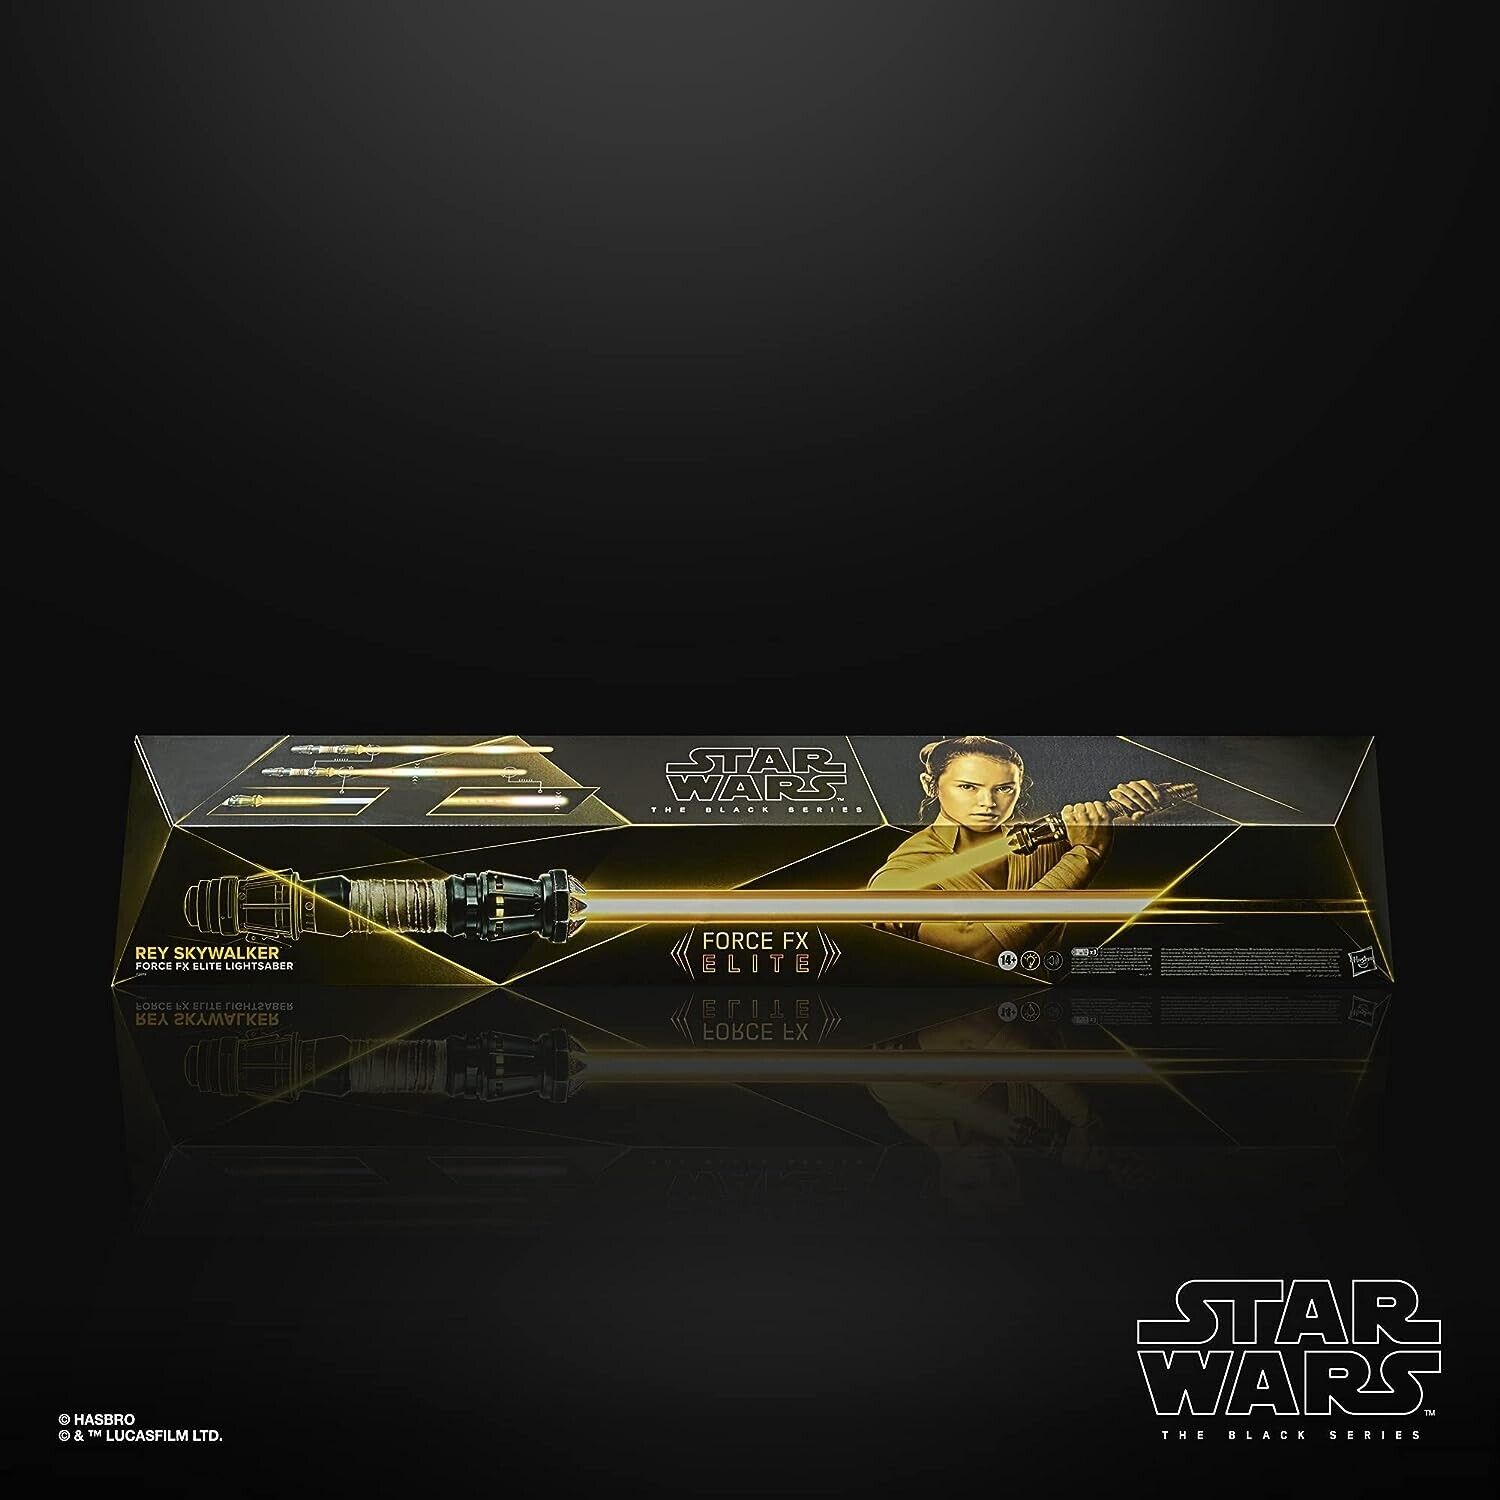 Star Wars The Black Series Rey Skywalker Force FX Elite Lightsaber New In Box